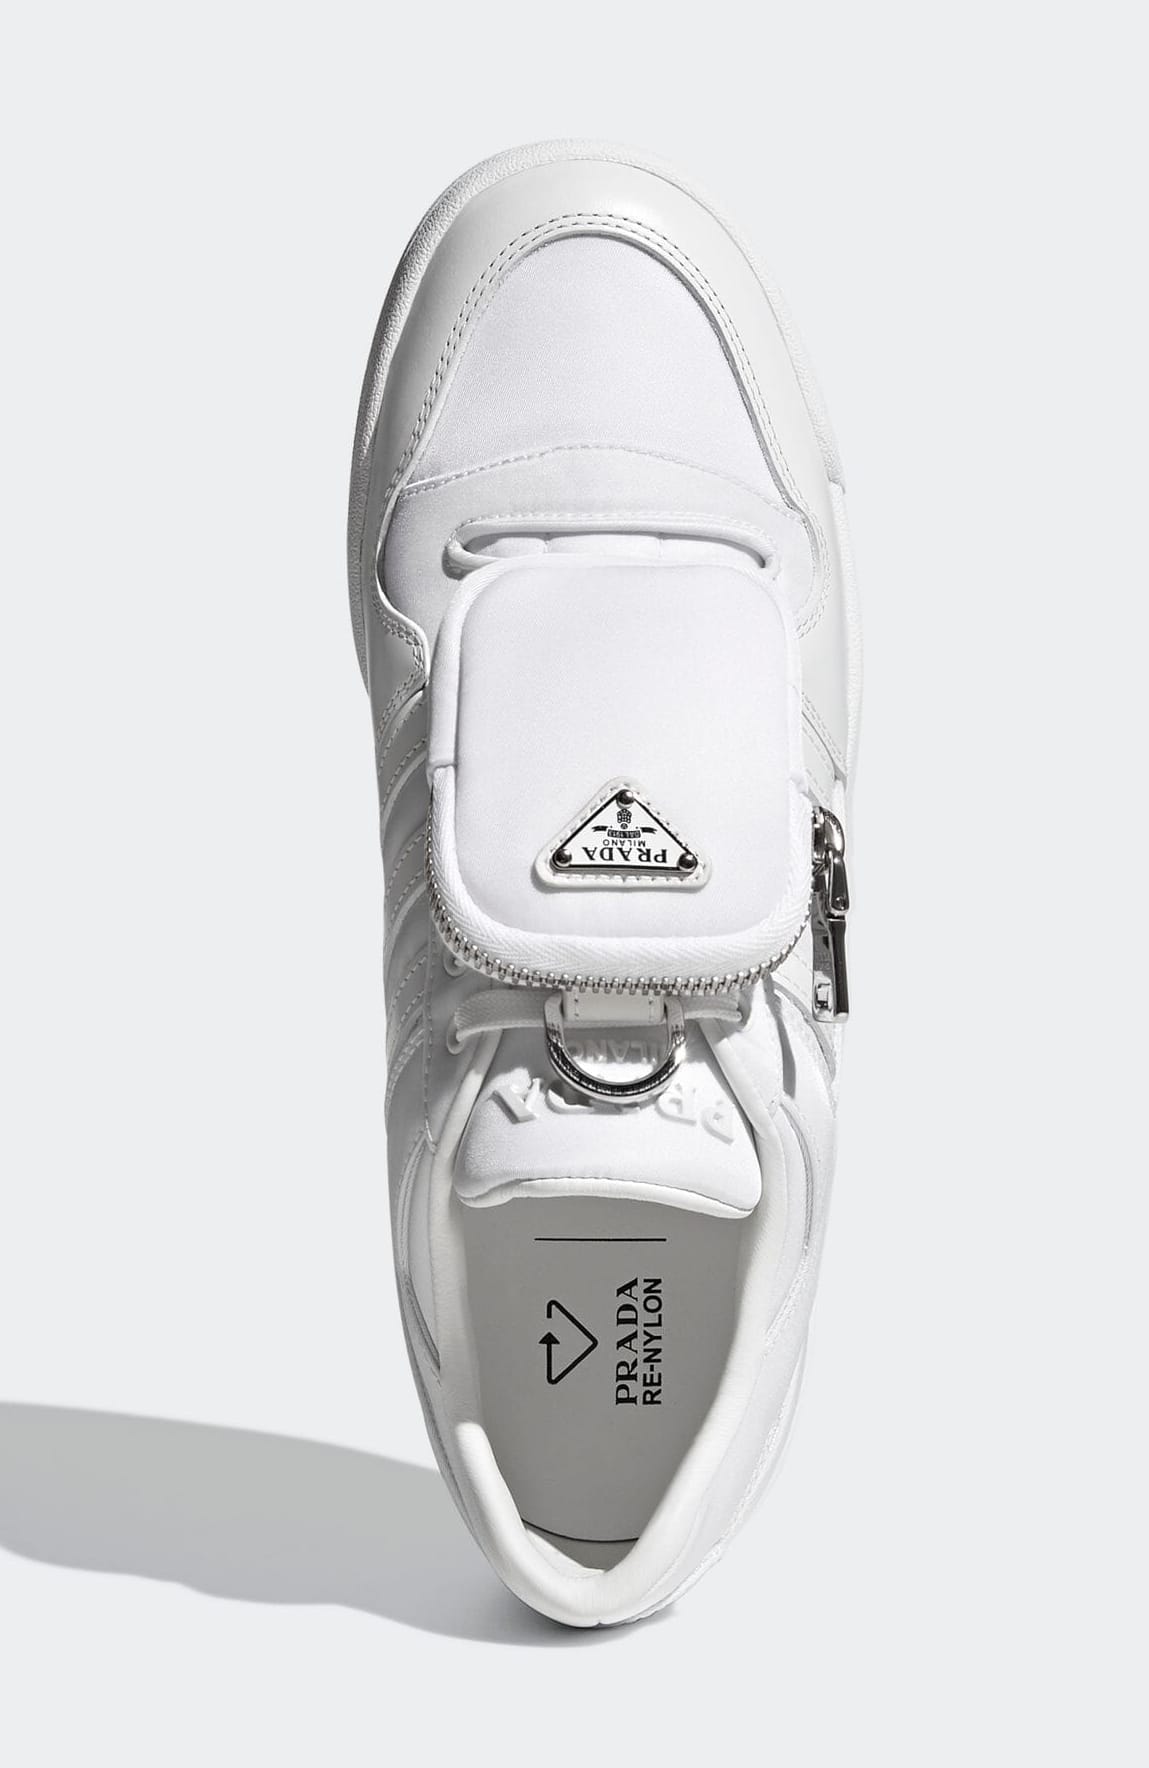 Prada x Adidas Forum Low 'White' GY7042 Top